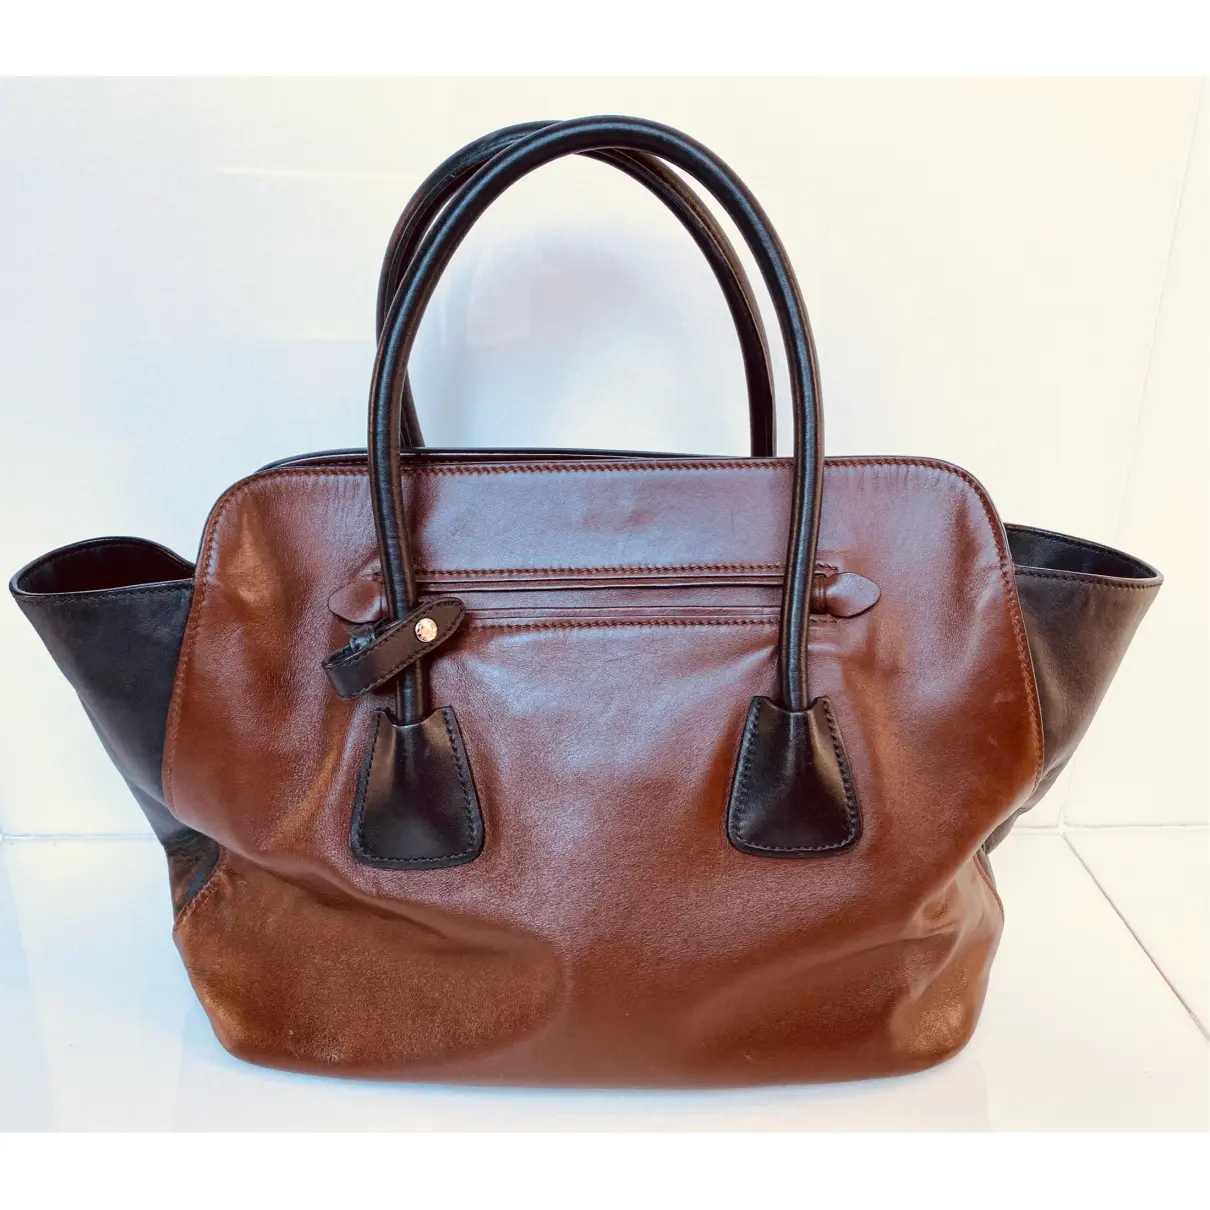 Buy Prada Leather tote online